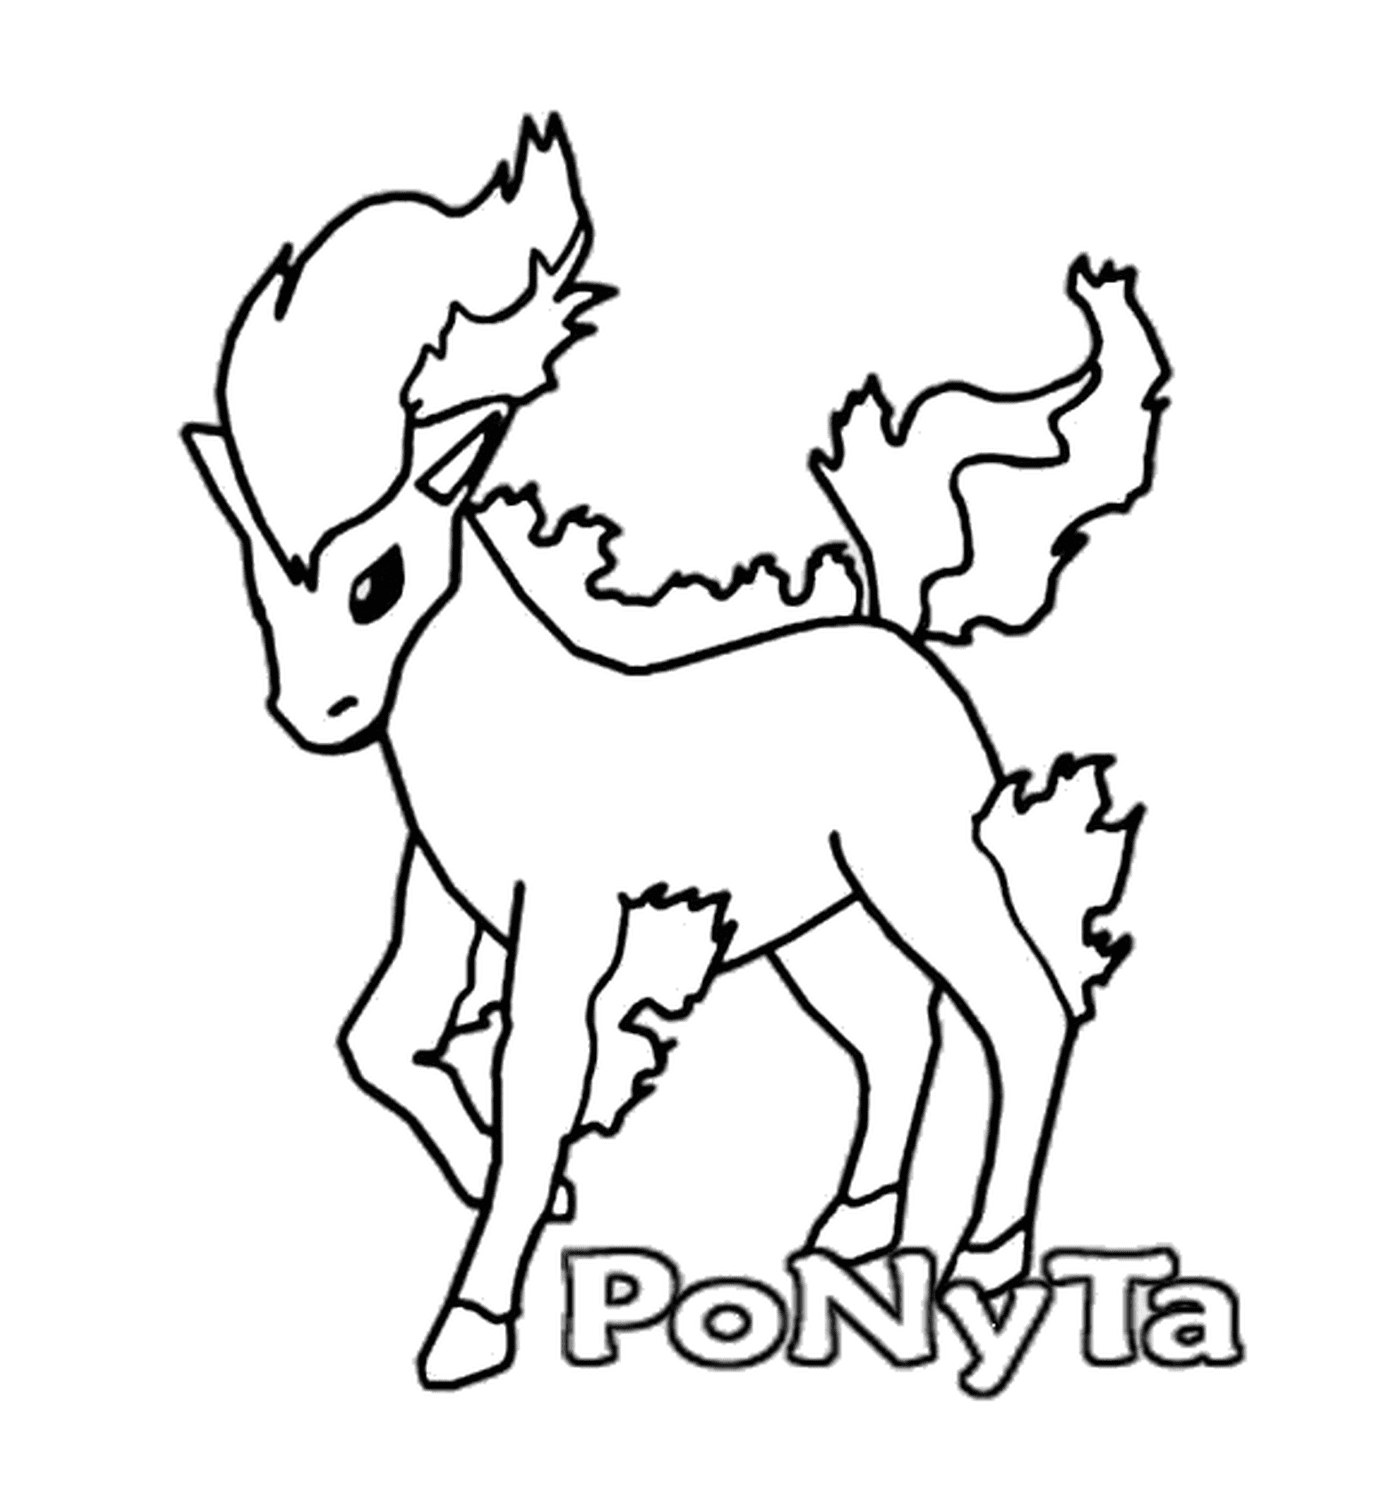  Ponyta : Elegantes Feuerpferd 